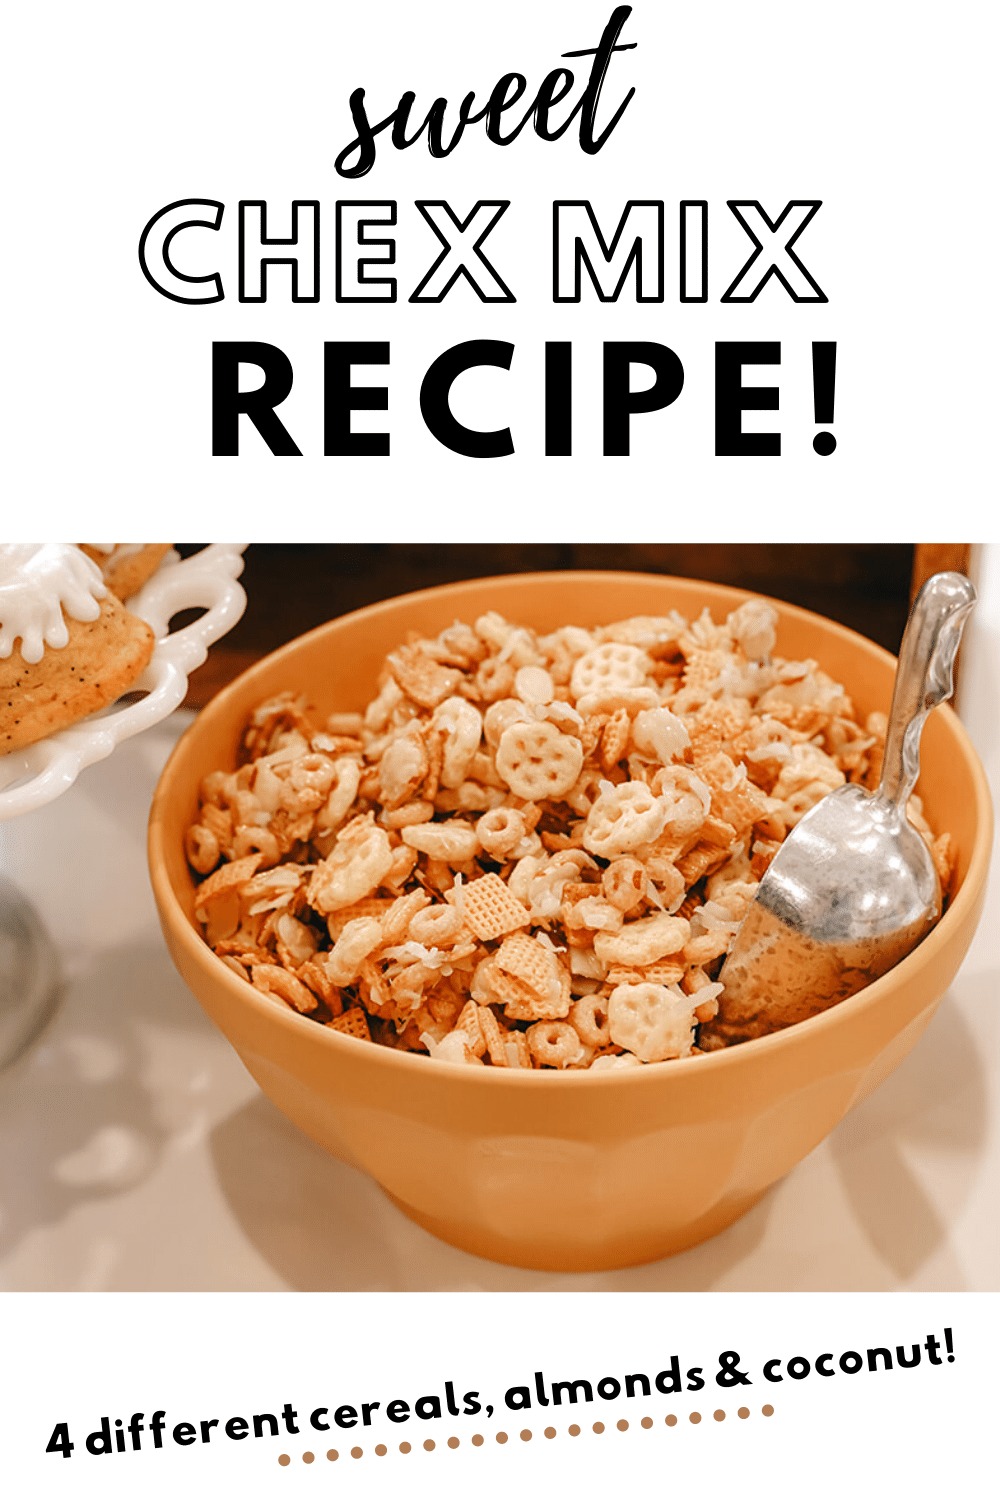 chex party mix recipe 